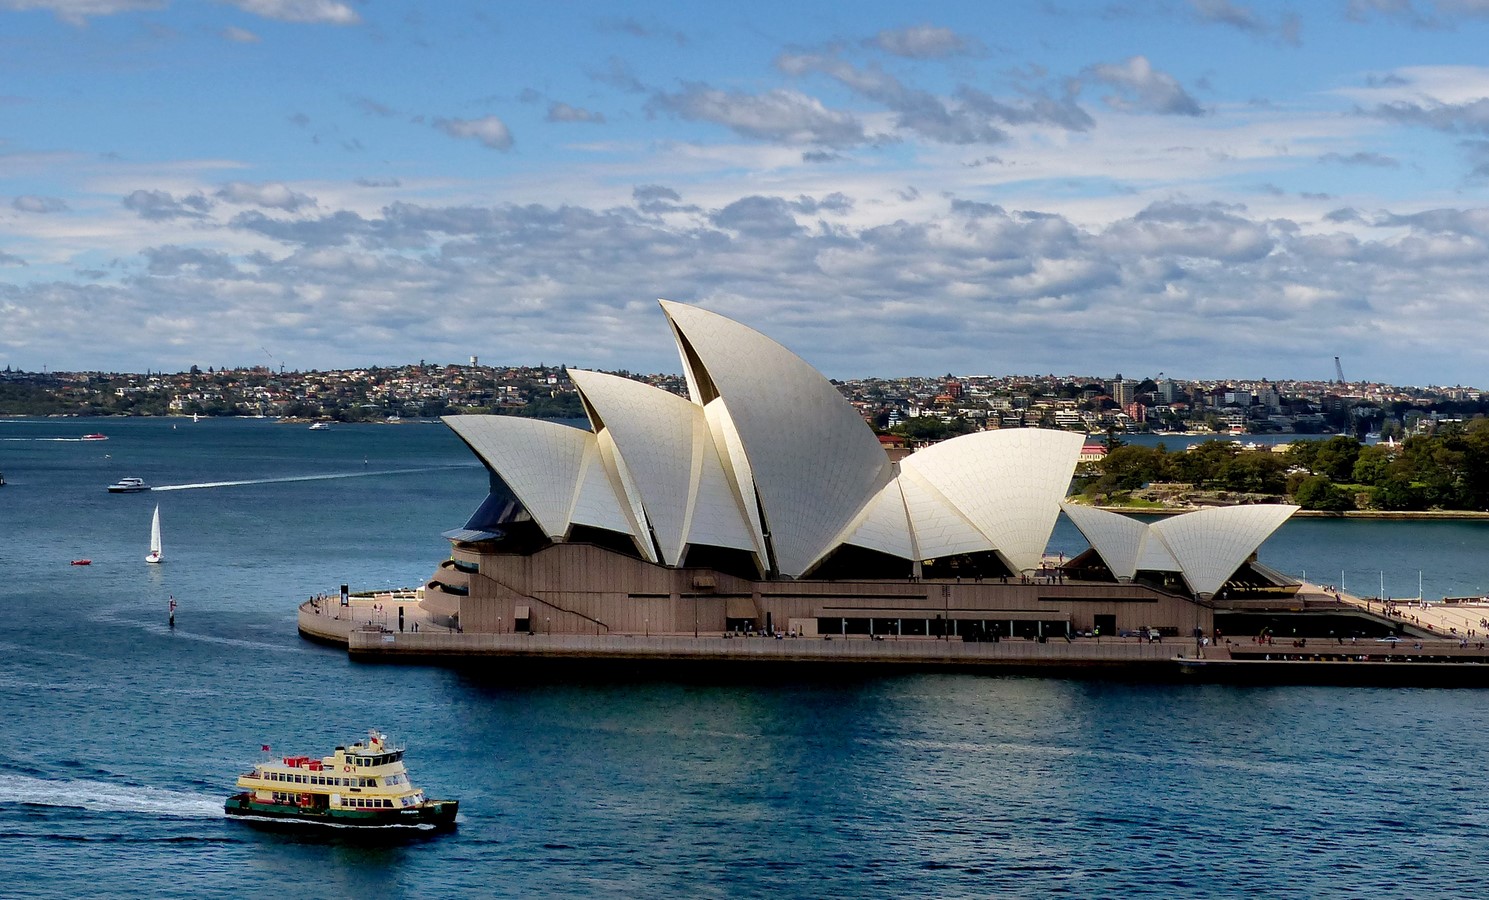 Architectural development of Sydney, Australia - Sheet - Sheet5